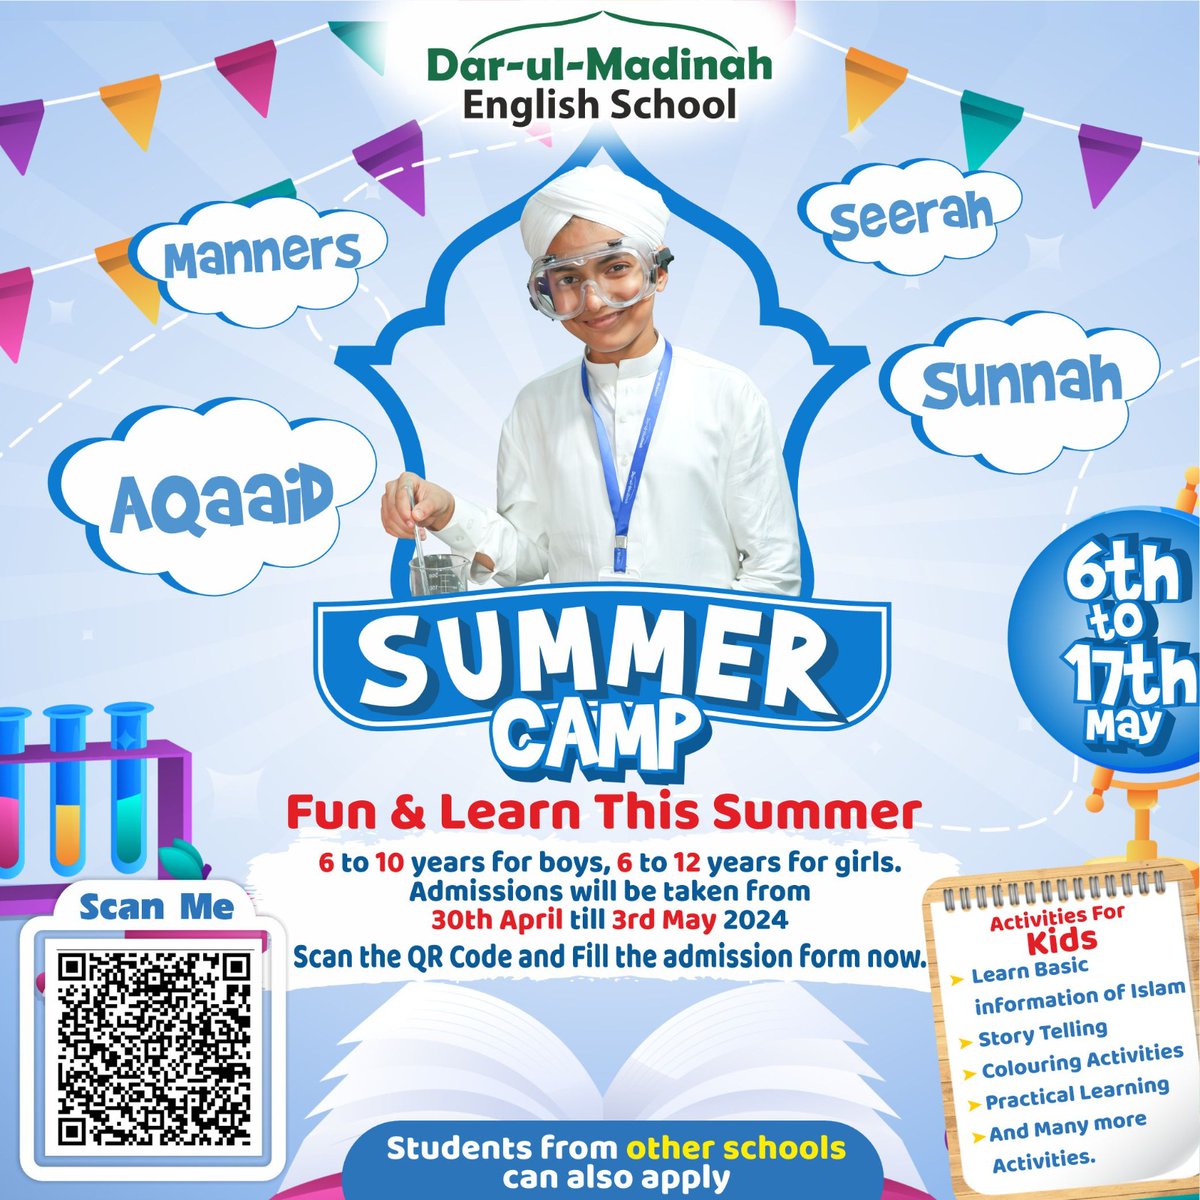 Summer Camp
Fun & Learn Thus Summer
.
.
.
.
#funandlearn #summercamp #summercamps #SummerCampFun #summercamp2024 #admissionsopen #school #DarulMadinah